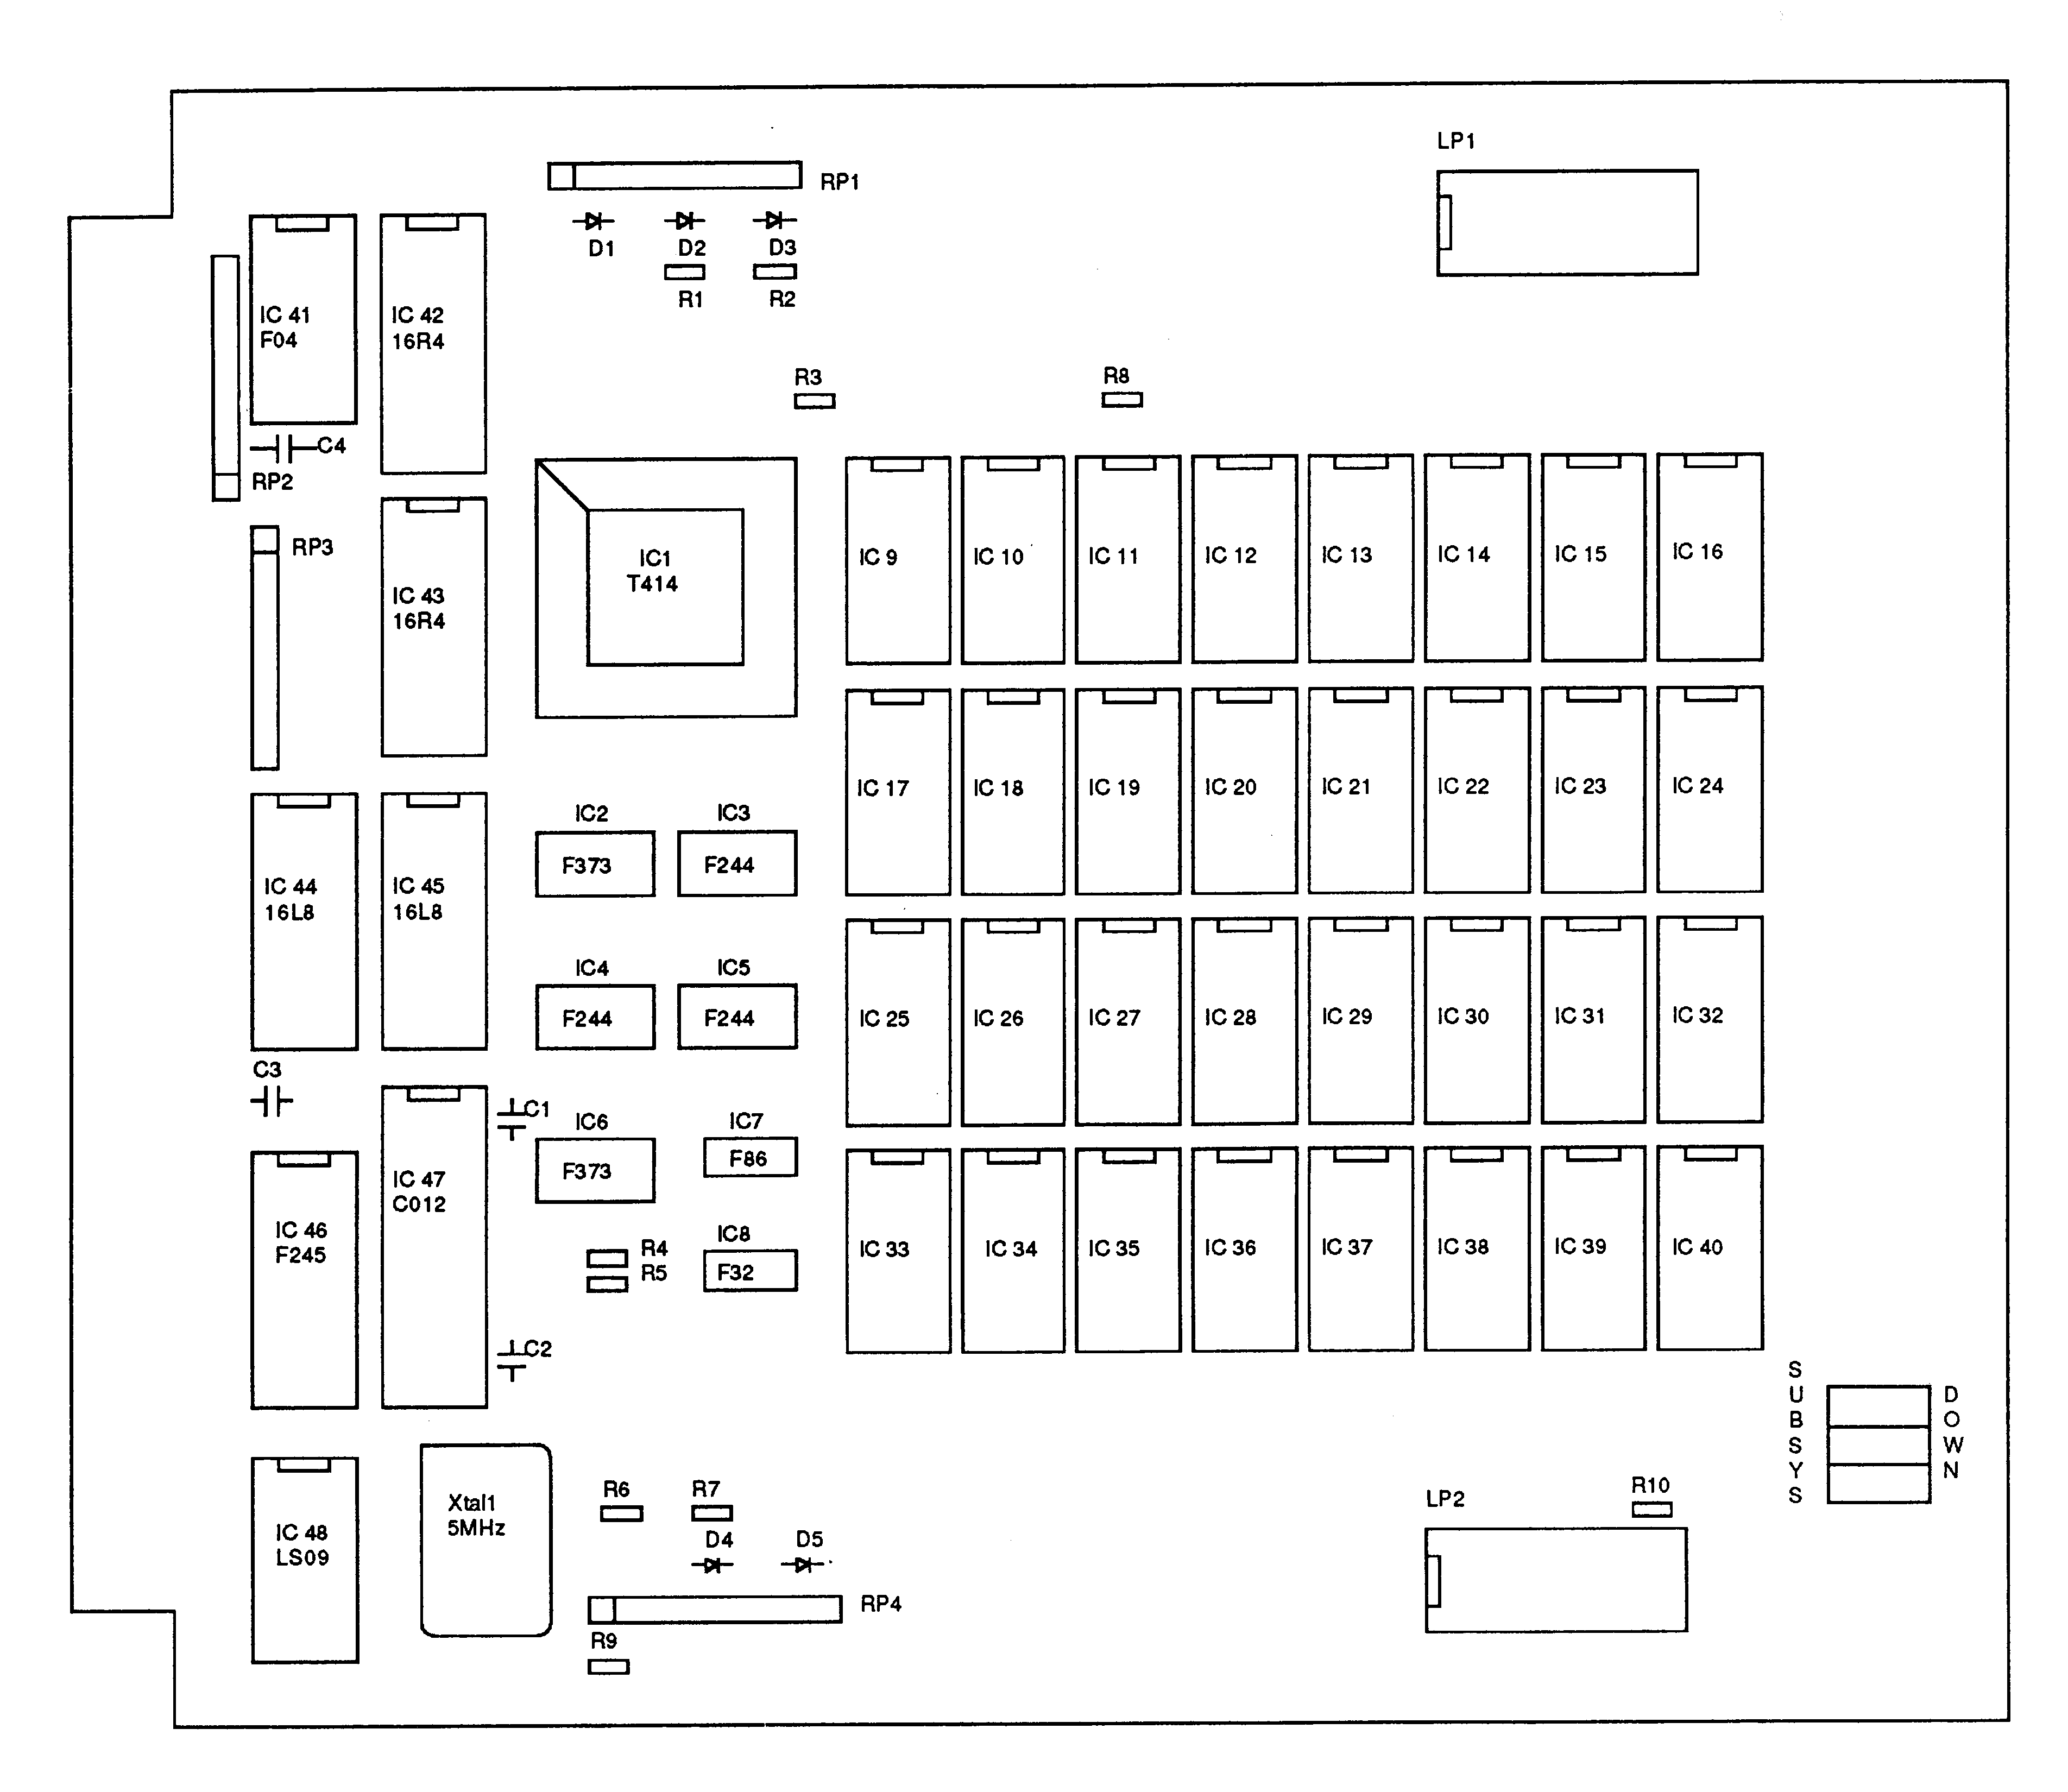 IMS B010 component layout